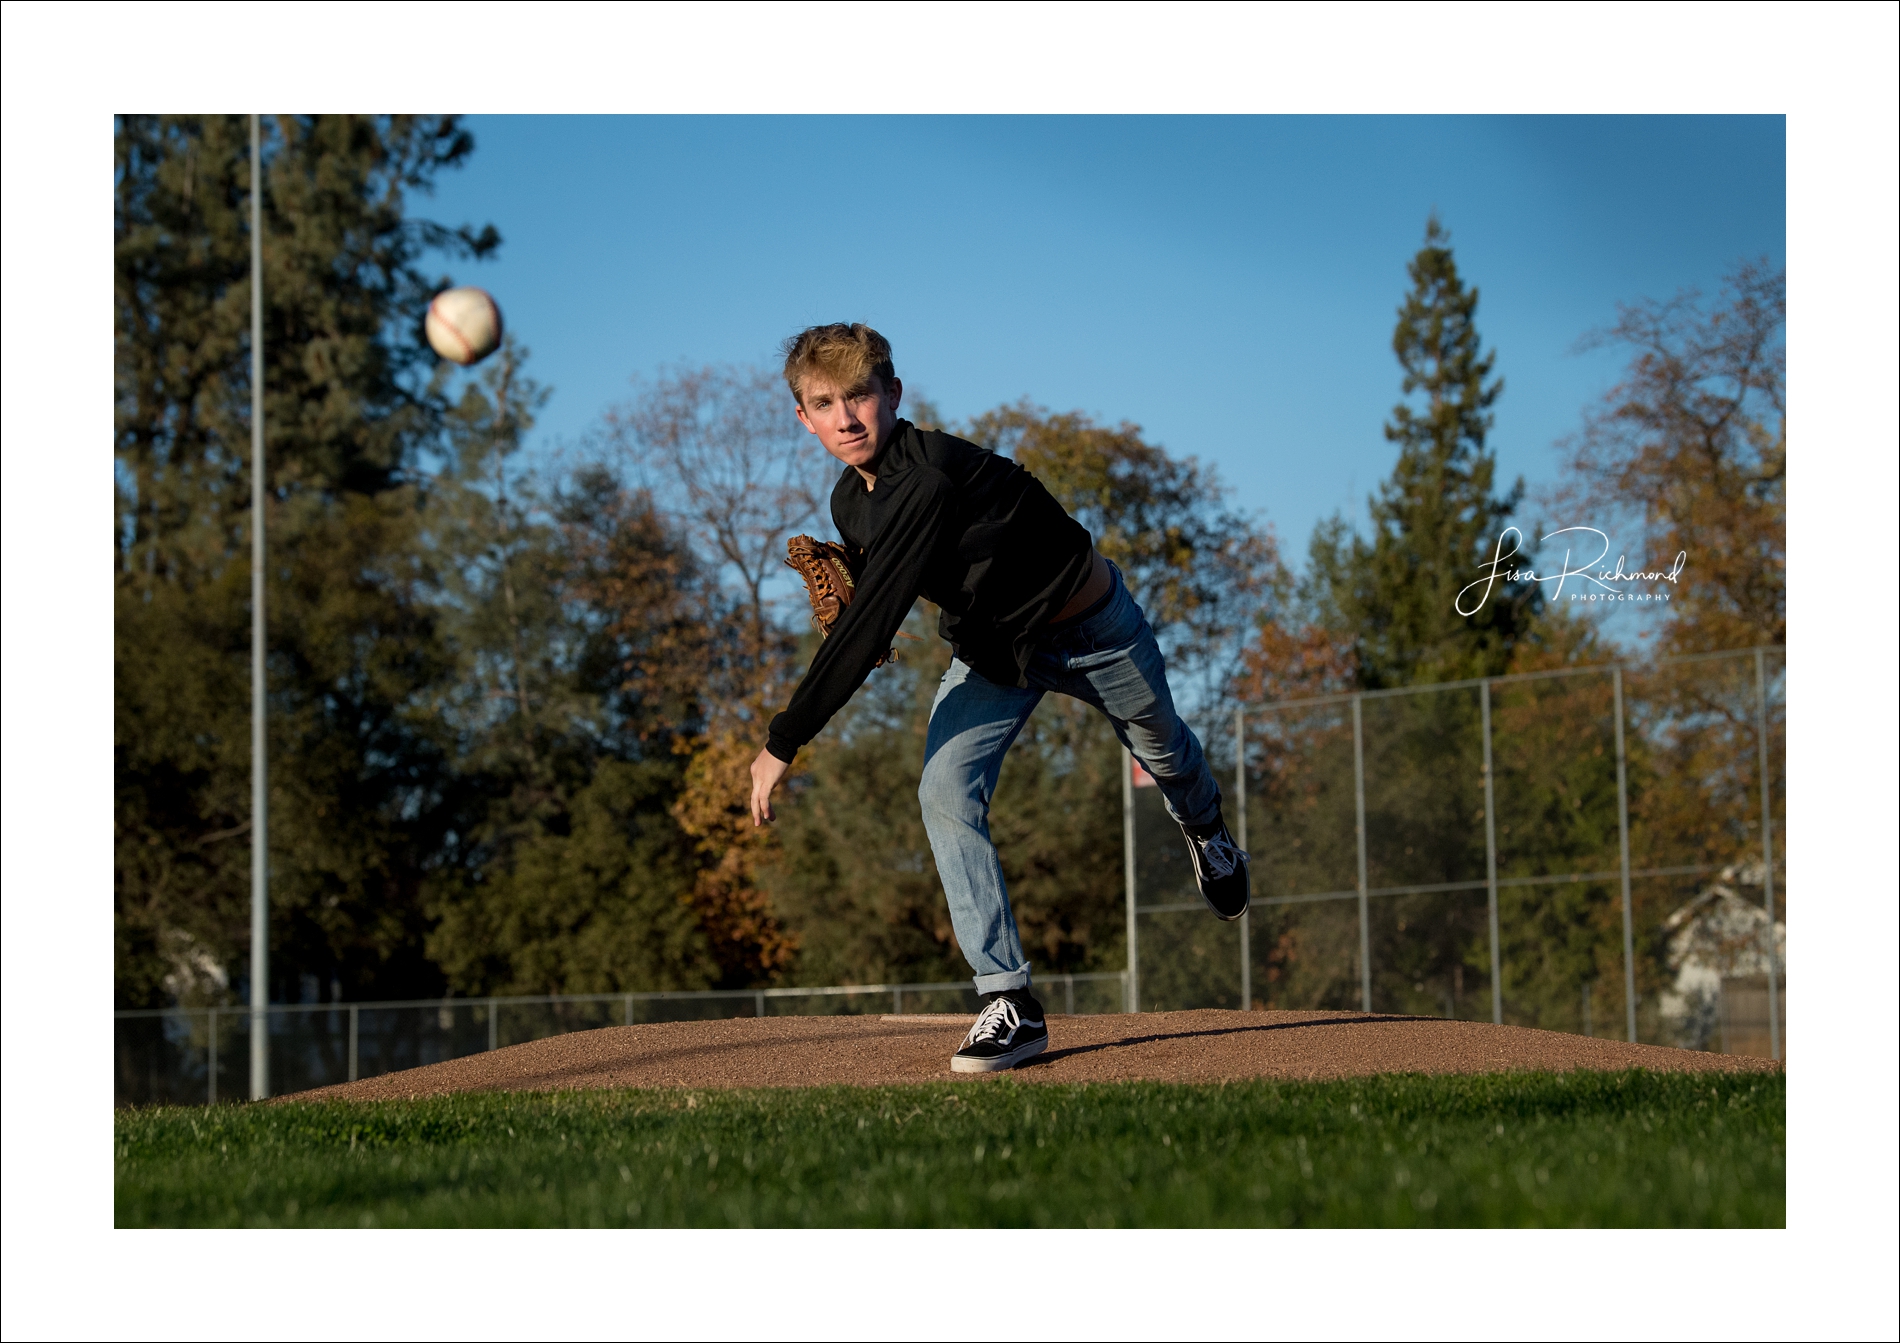 Jarrett &#8211; A lefty pitcher on the varsity El Dorado High School baseball team